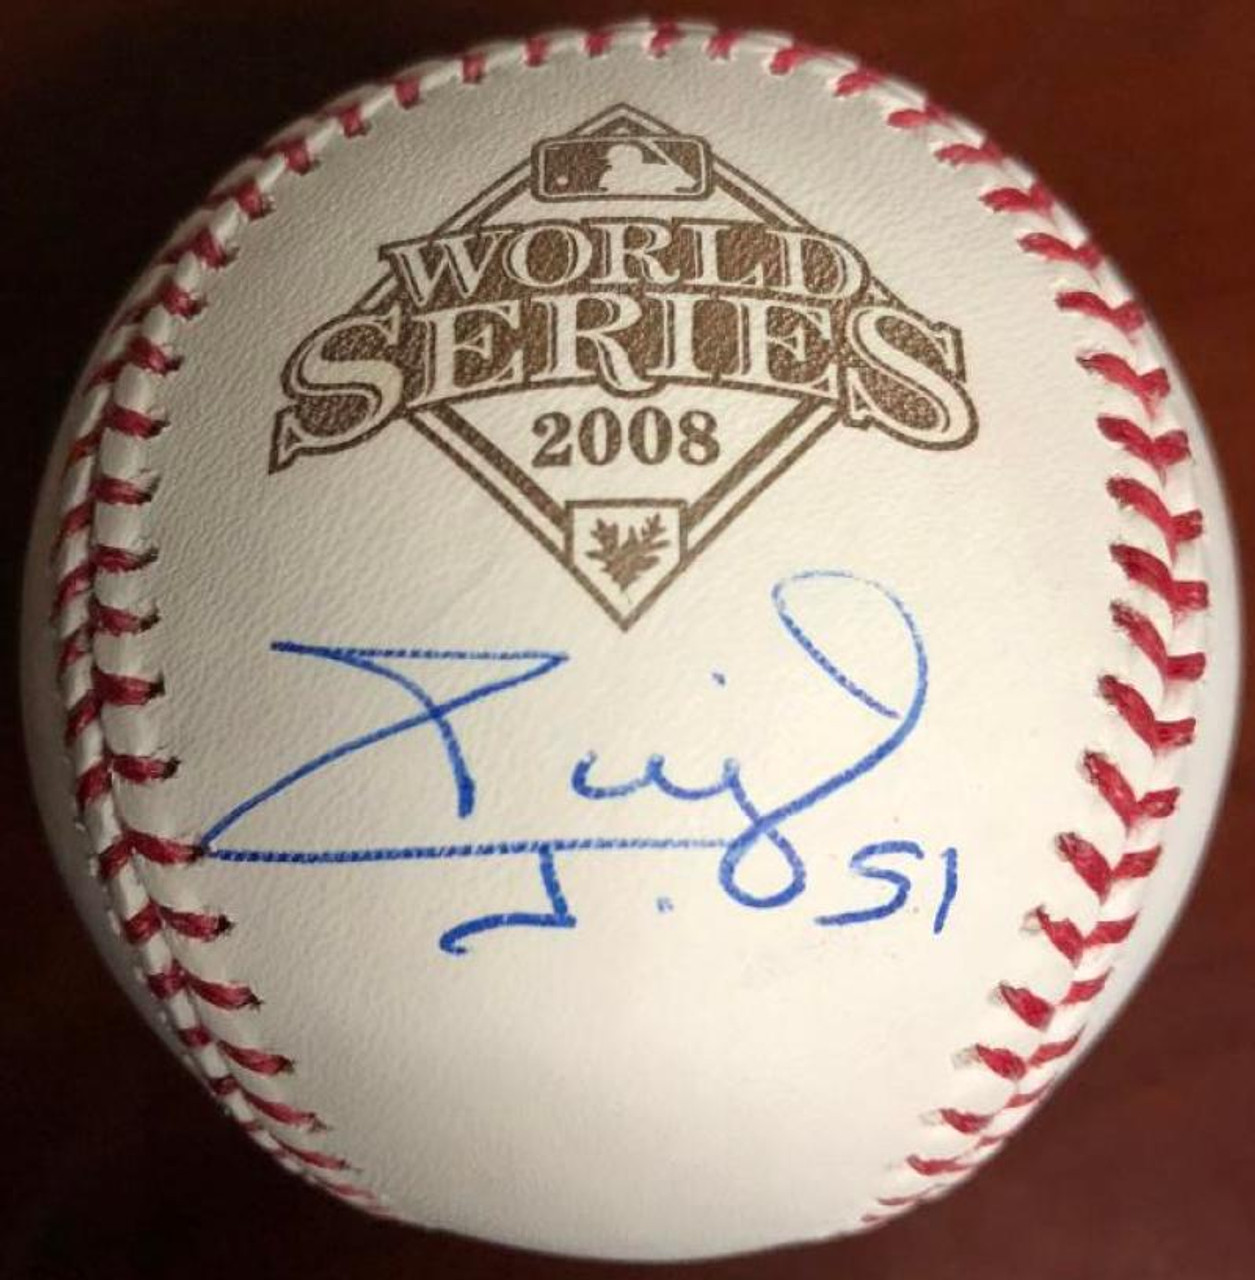 Carlos Ruiz Autographed 2008 World Series Baseball - Under the Radar Sports